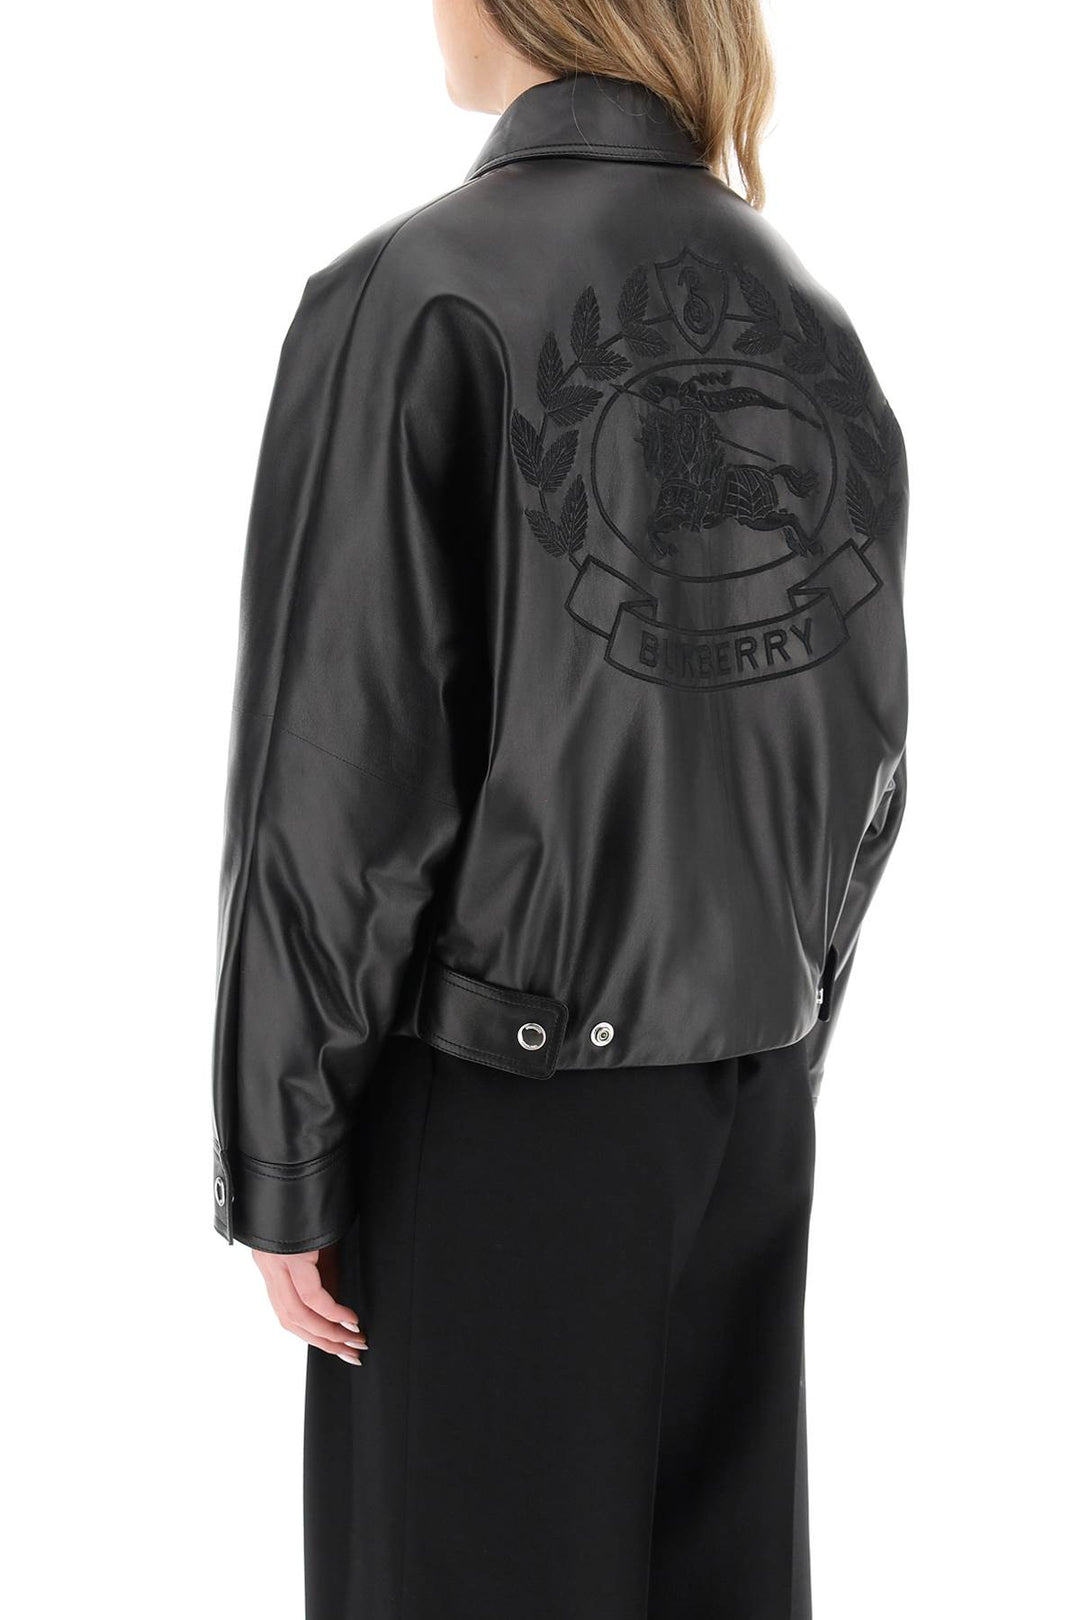 Burberry Embroidered Ekd Leather Jacket   Nero